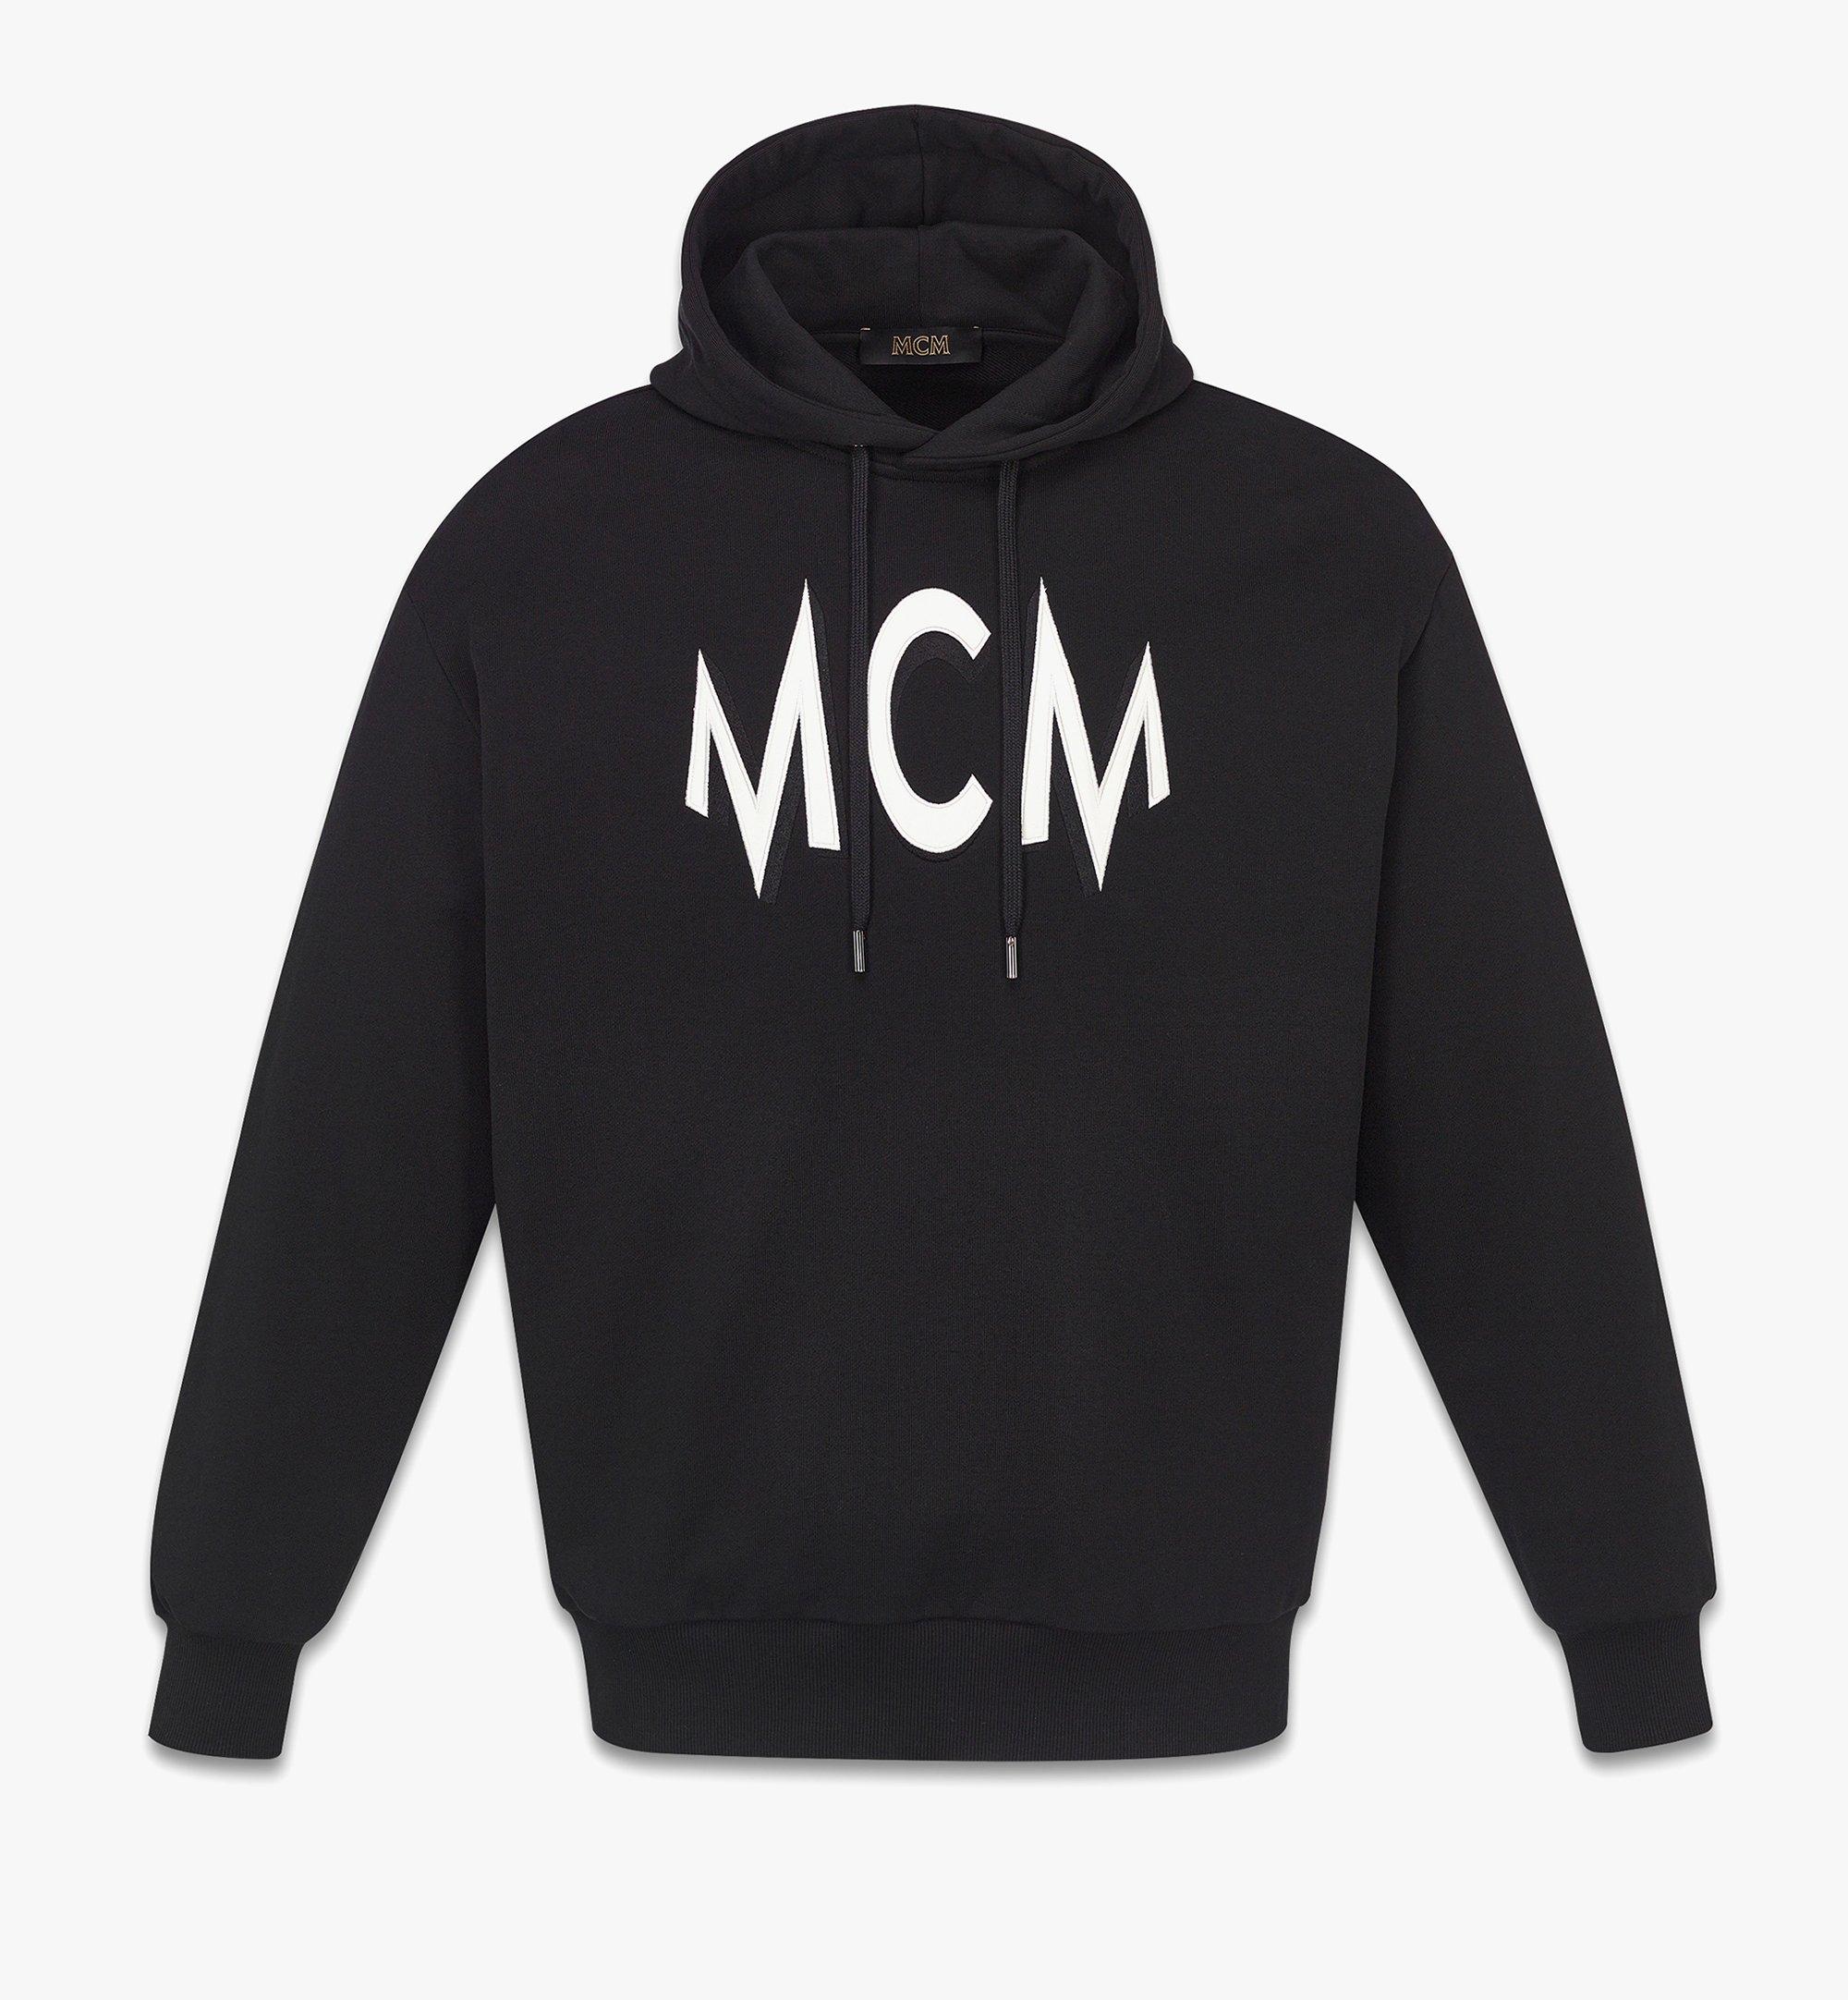 MCM Embroidered Logo Hoodie Sweatshirt - Medium - BRAND NEW WITH TAGS!